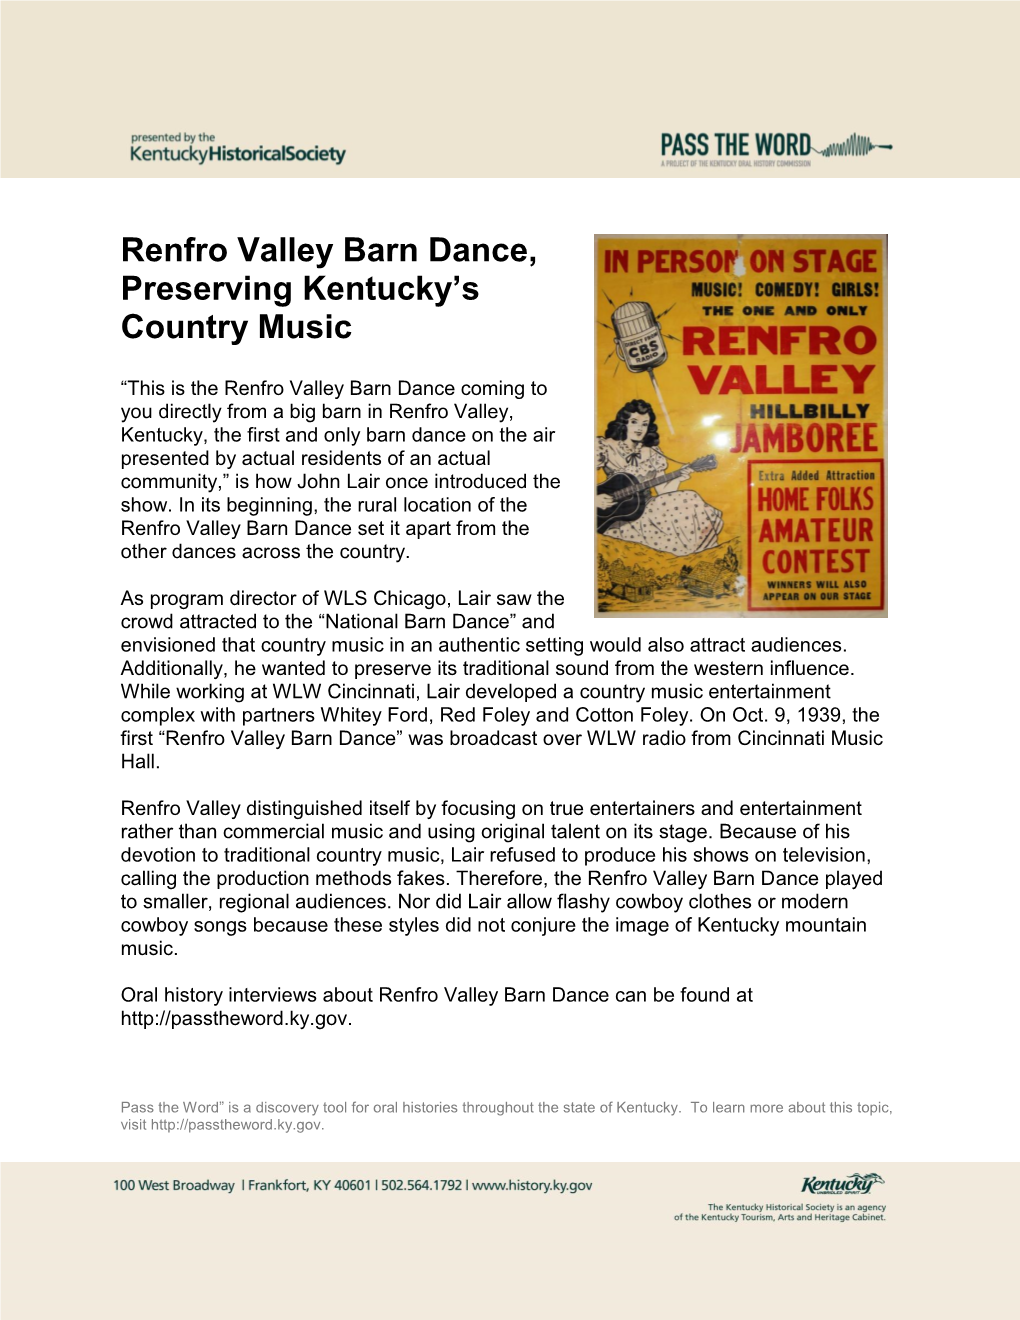 Renfro Valley Barn Dance, Preserving Kentucky's Country Music